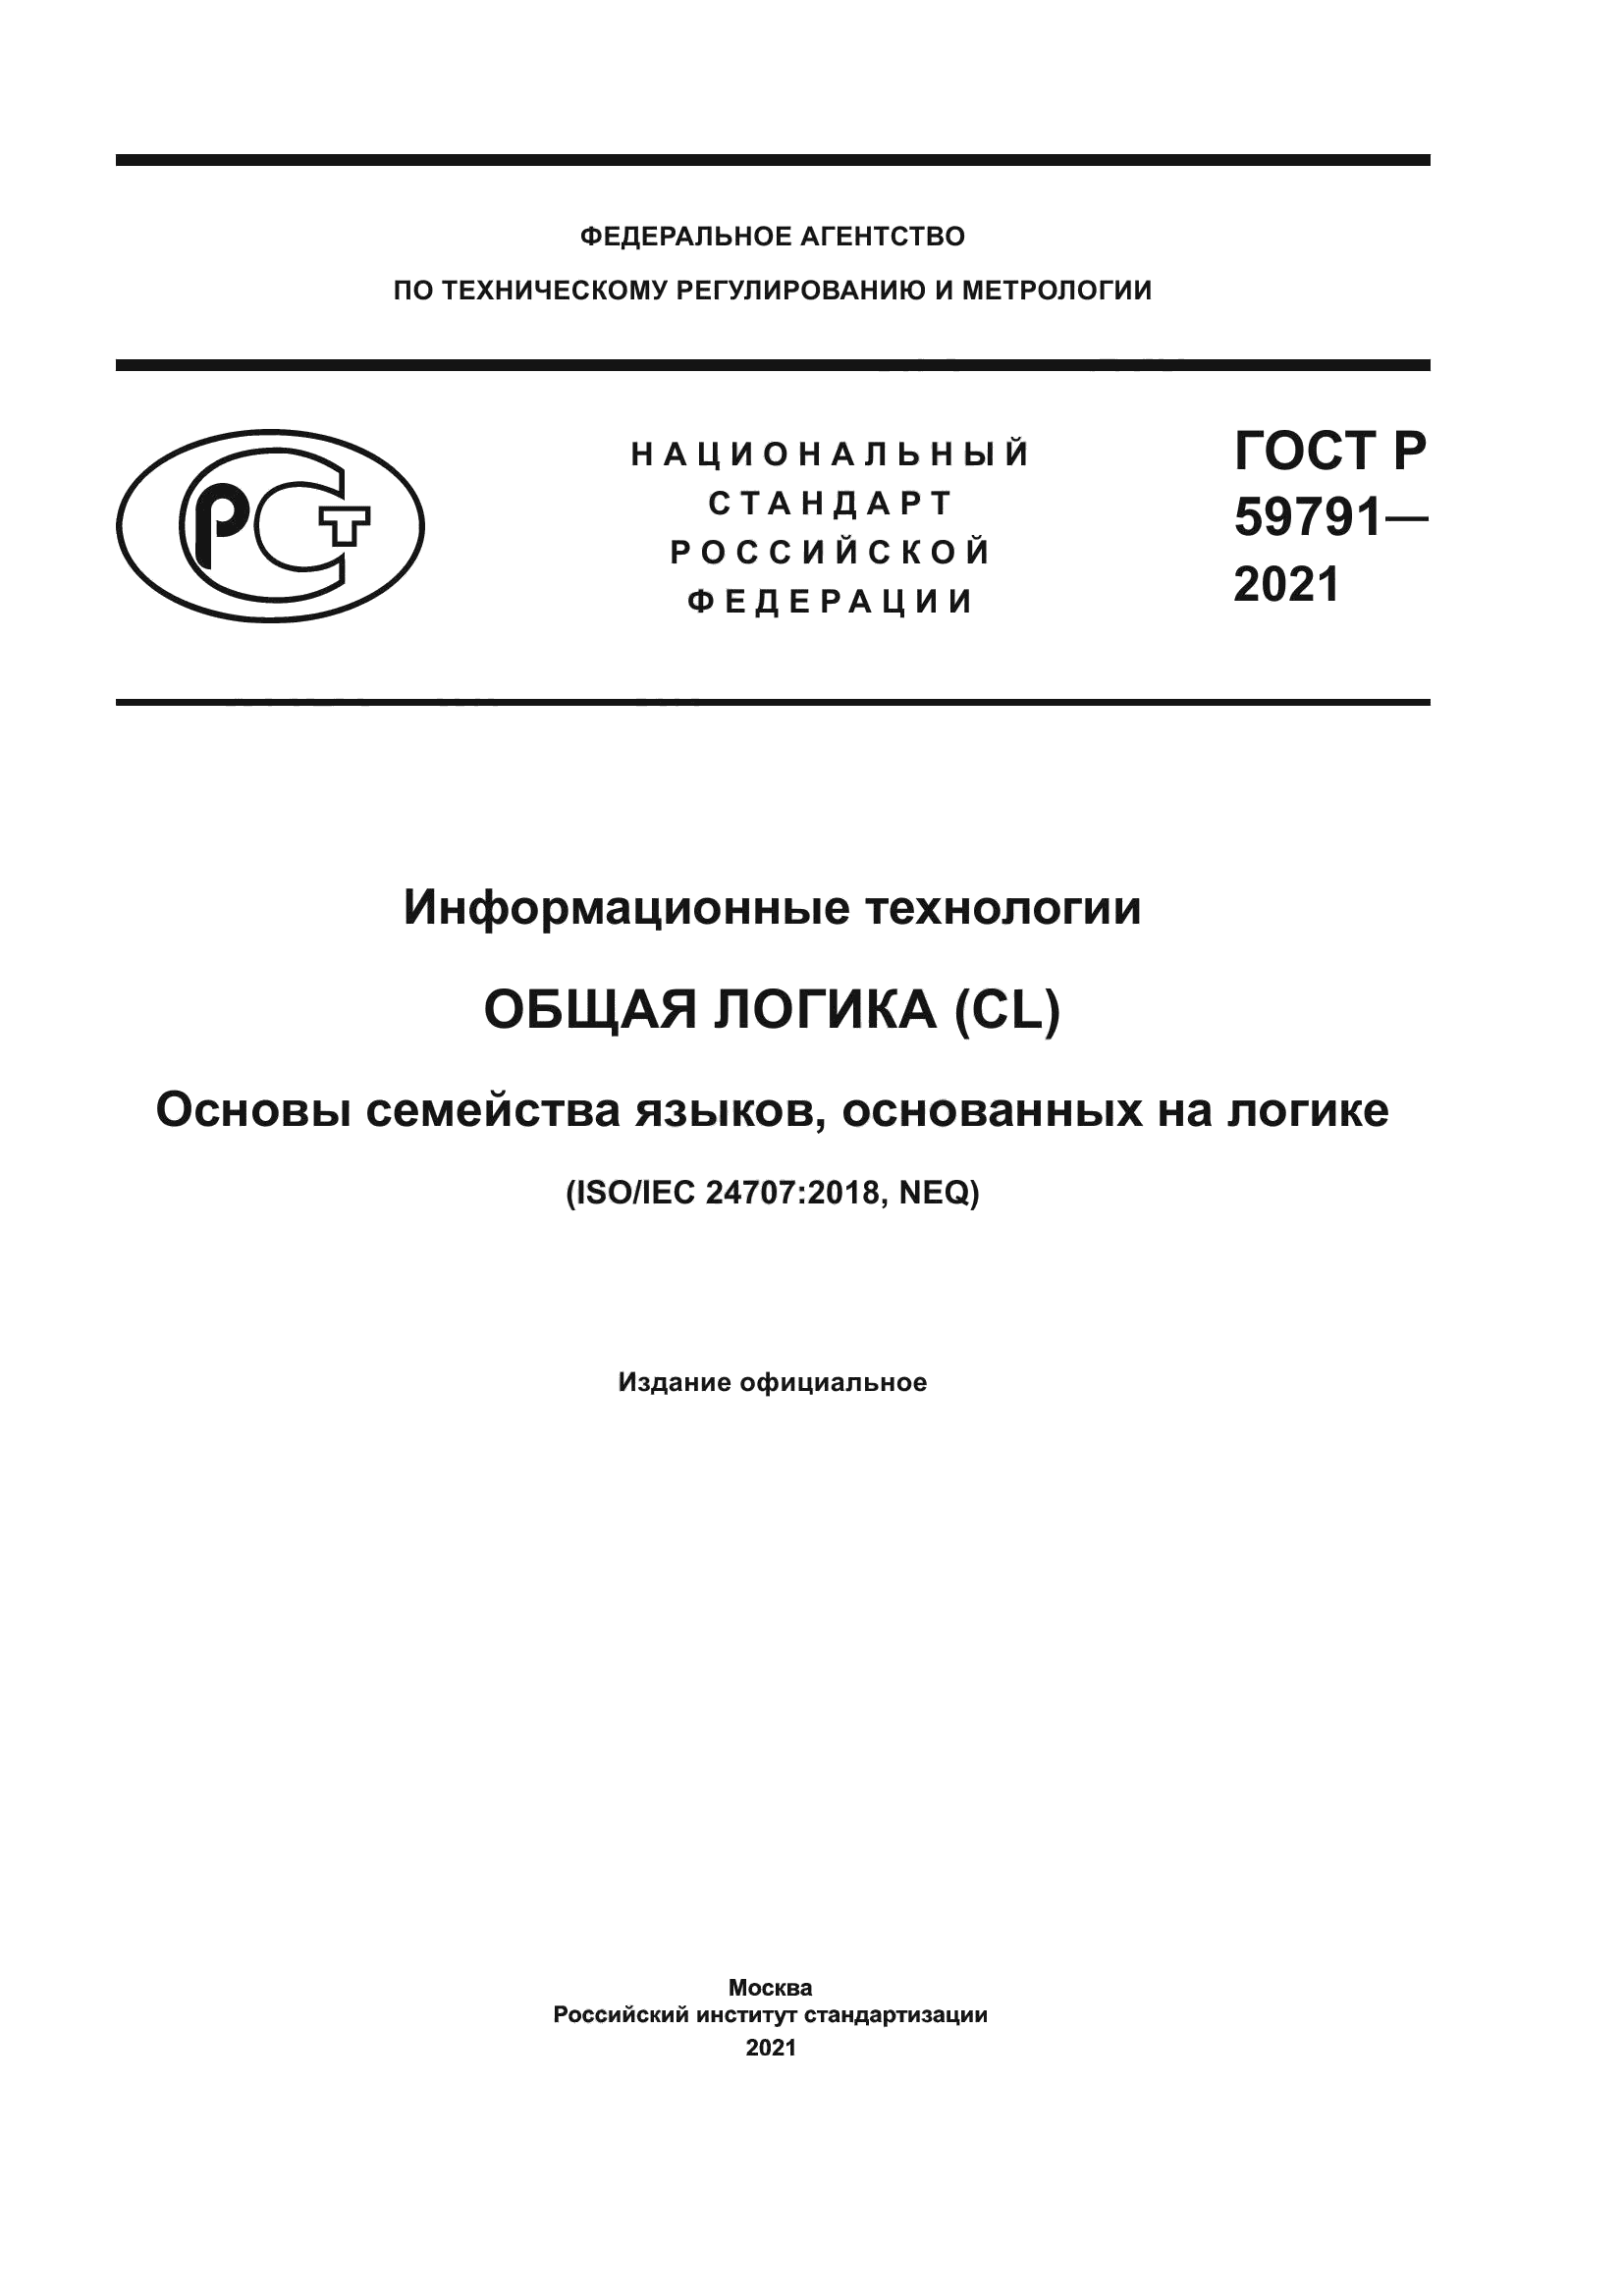 ГОСТ Р 59791-2021